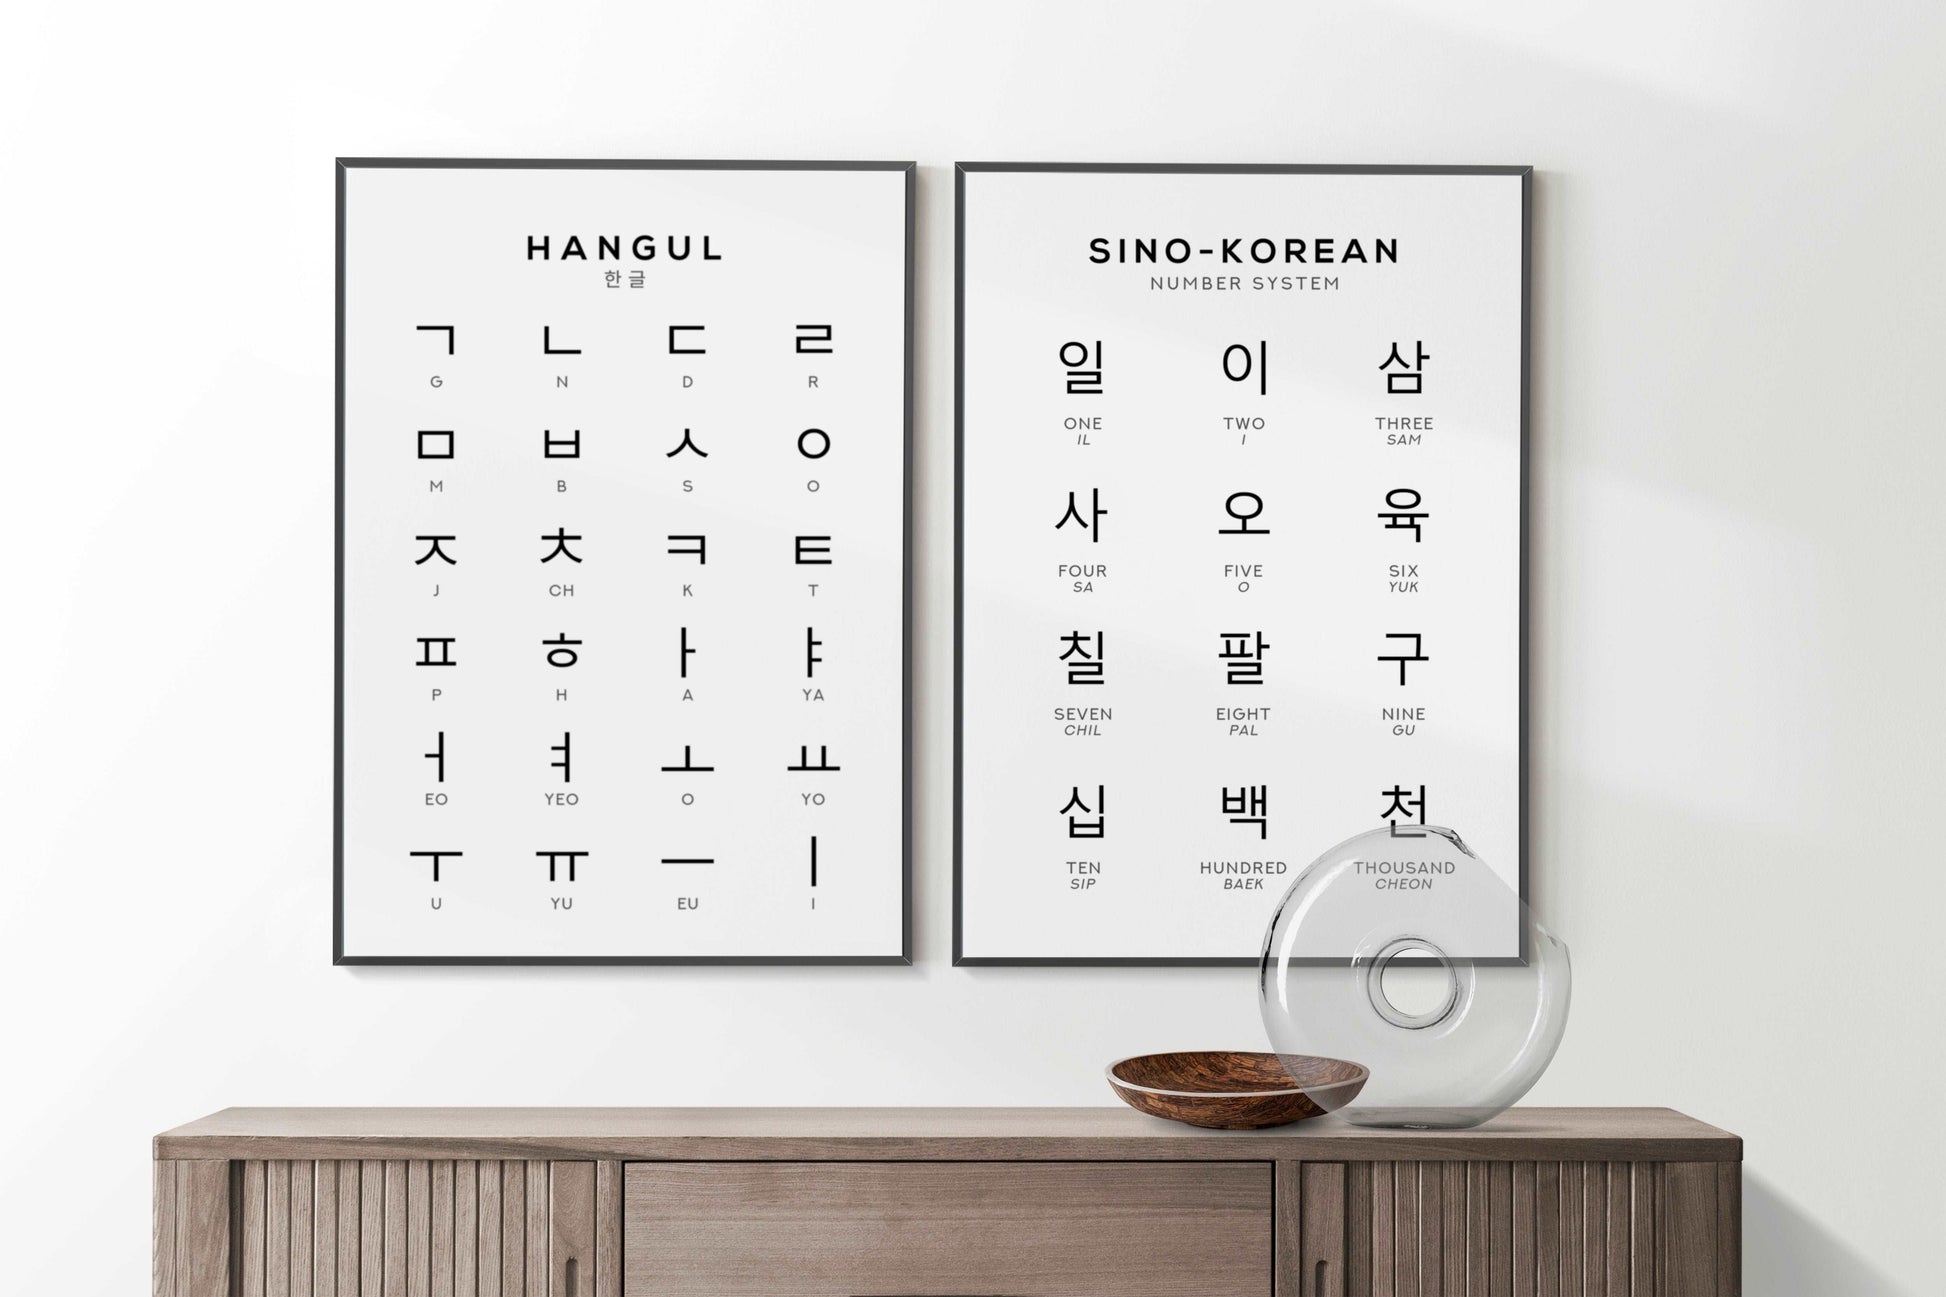 Sino Korean Number Print, Hangul Learning Wall Art Typelab